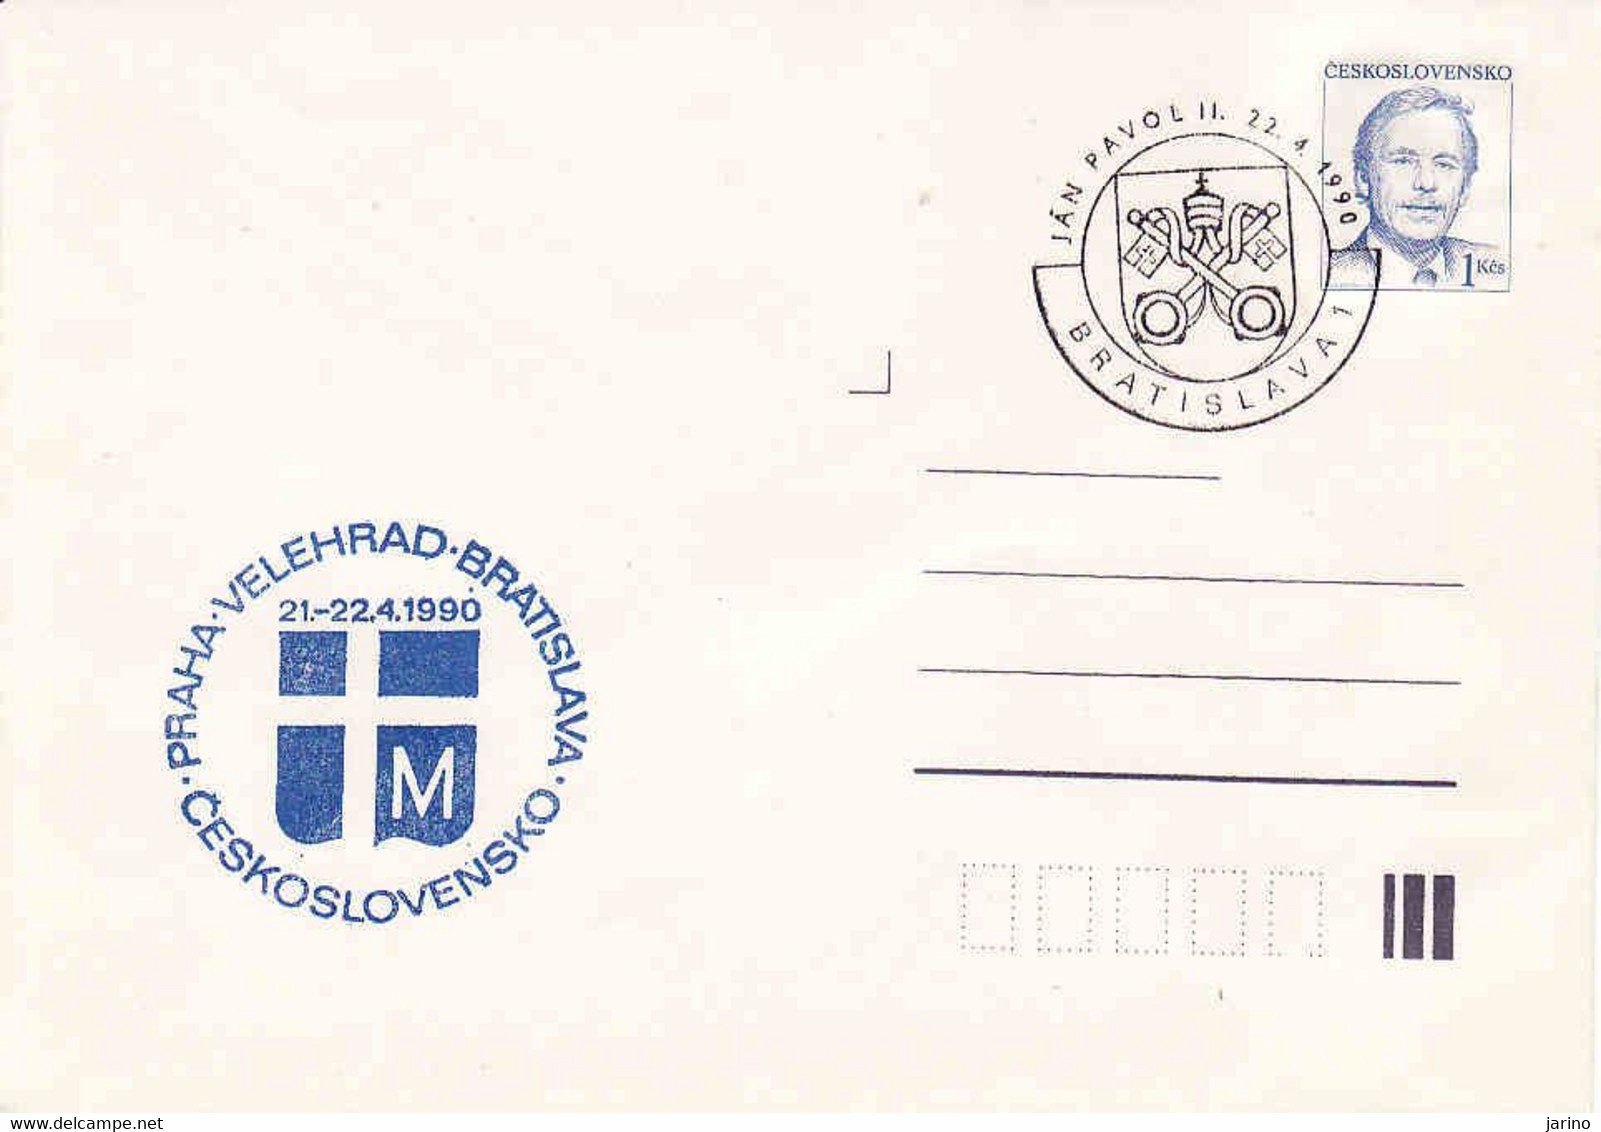 Czechoslovakia 1990, Praha - Velehrad, Bratislava, Visit John Pavul II 21. - 22.4 .1990 - Sobres